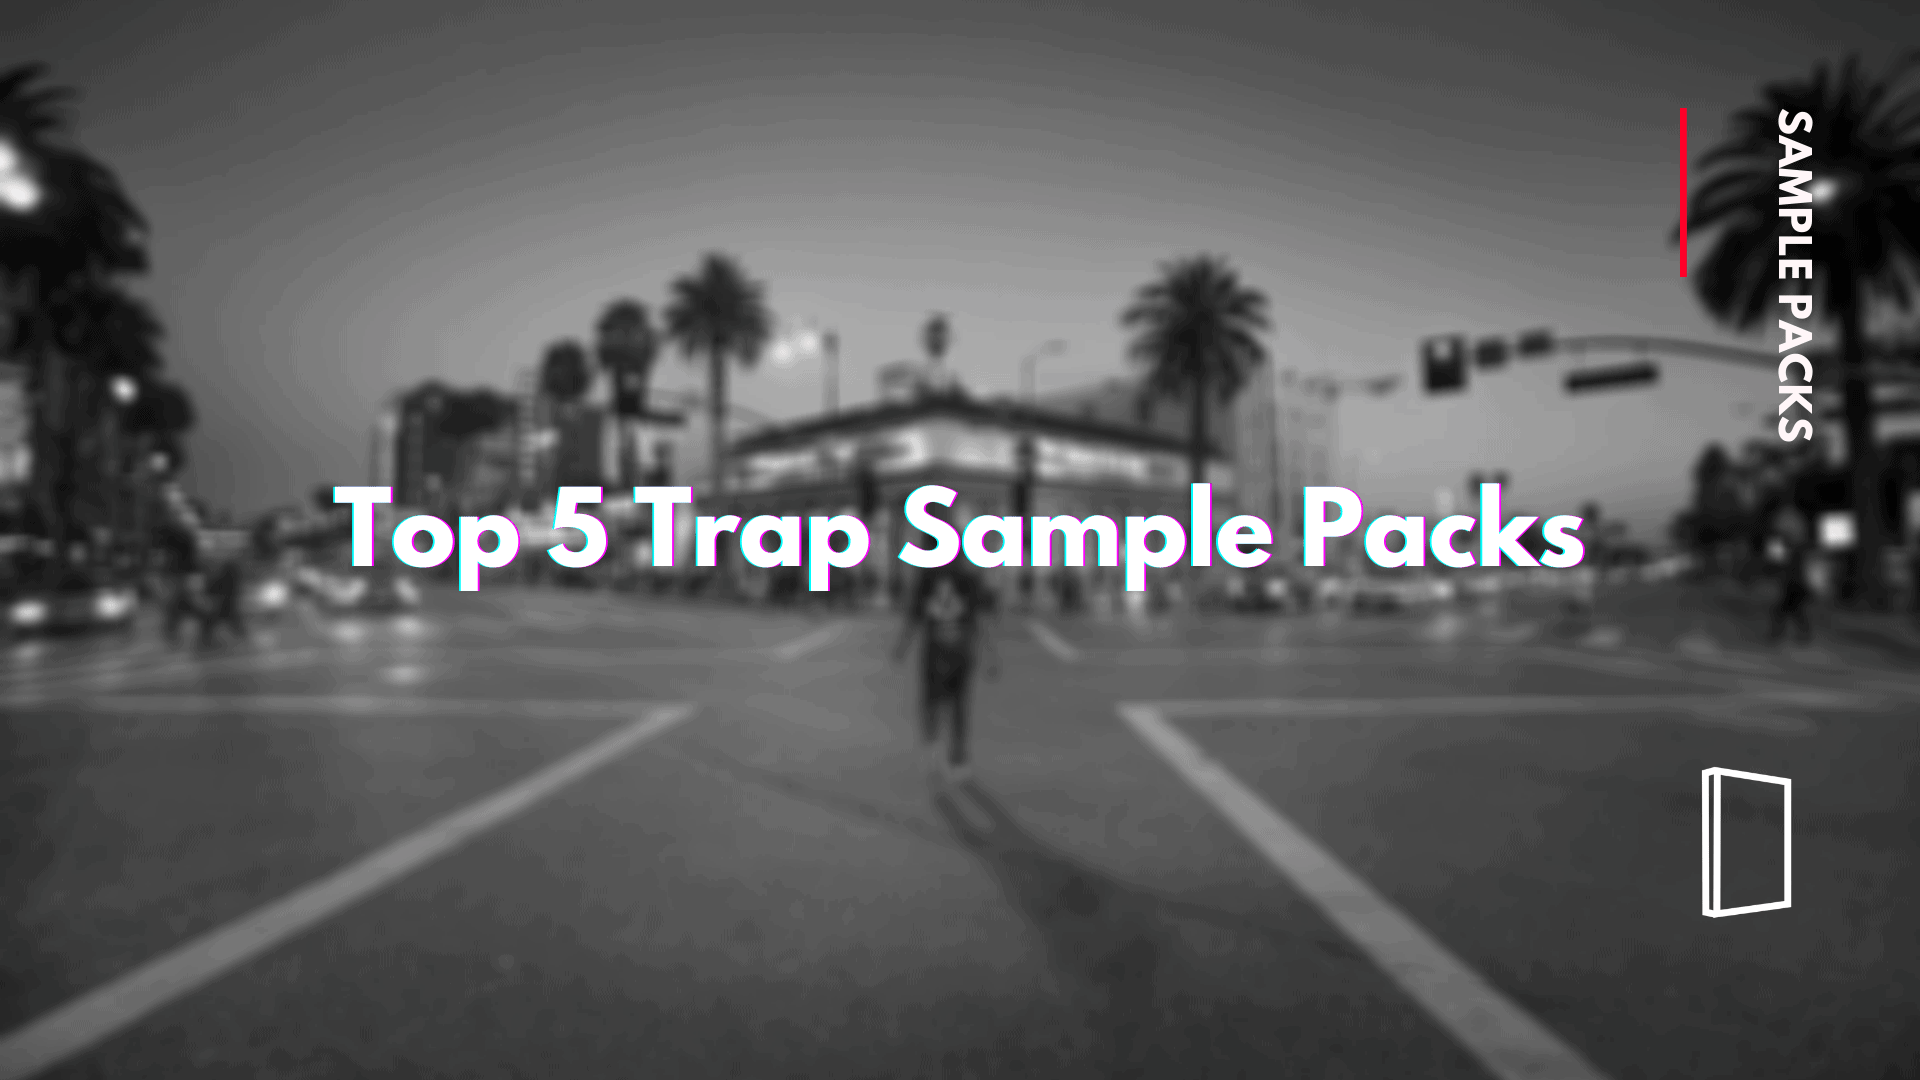 Trap sample pack free download